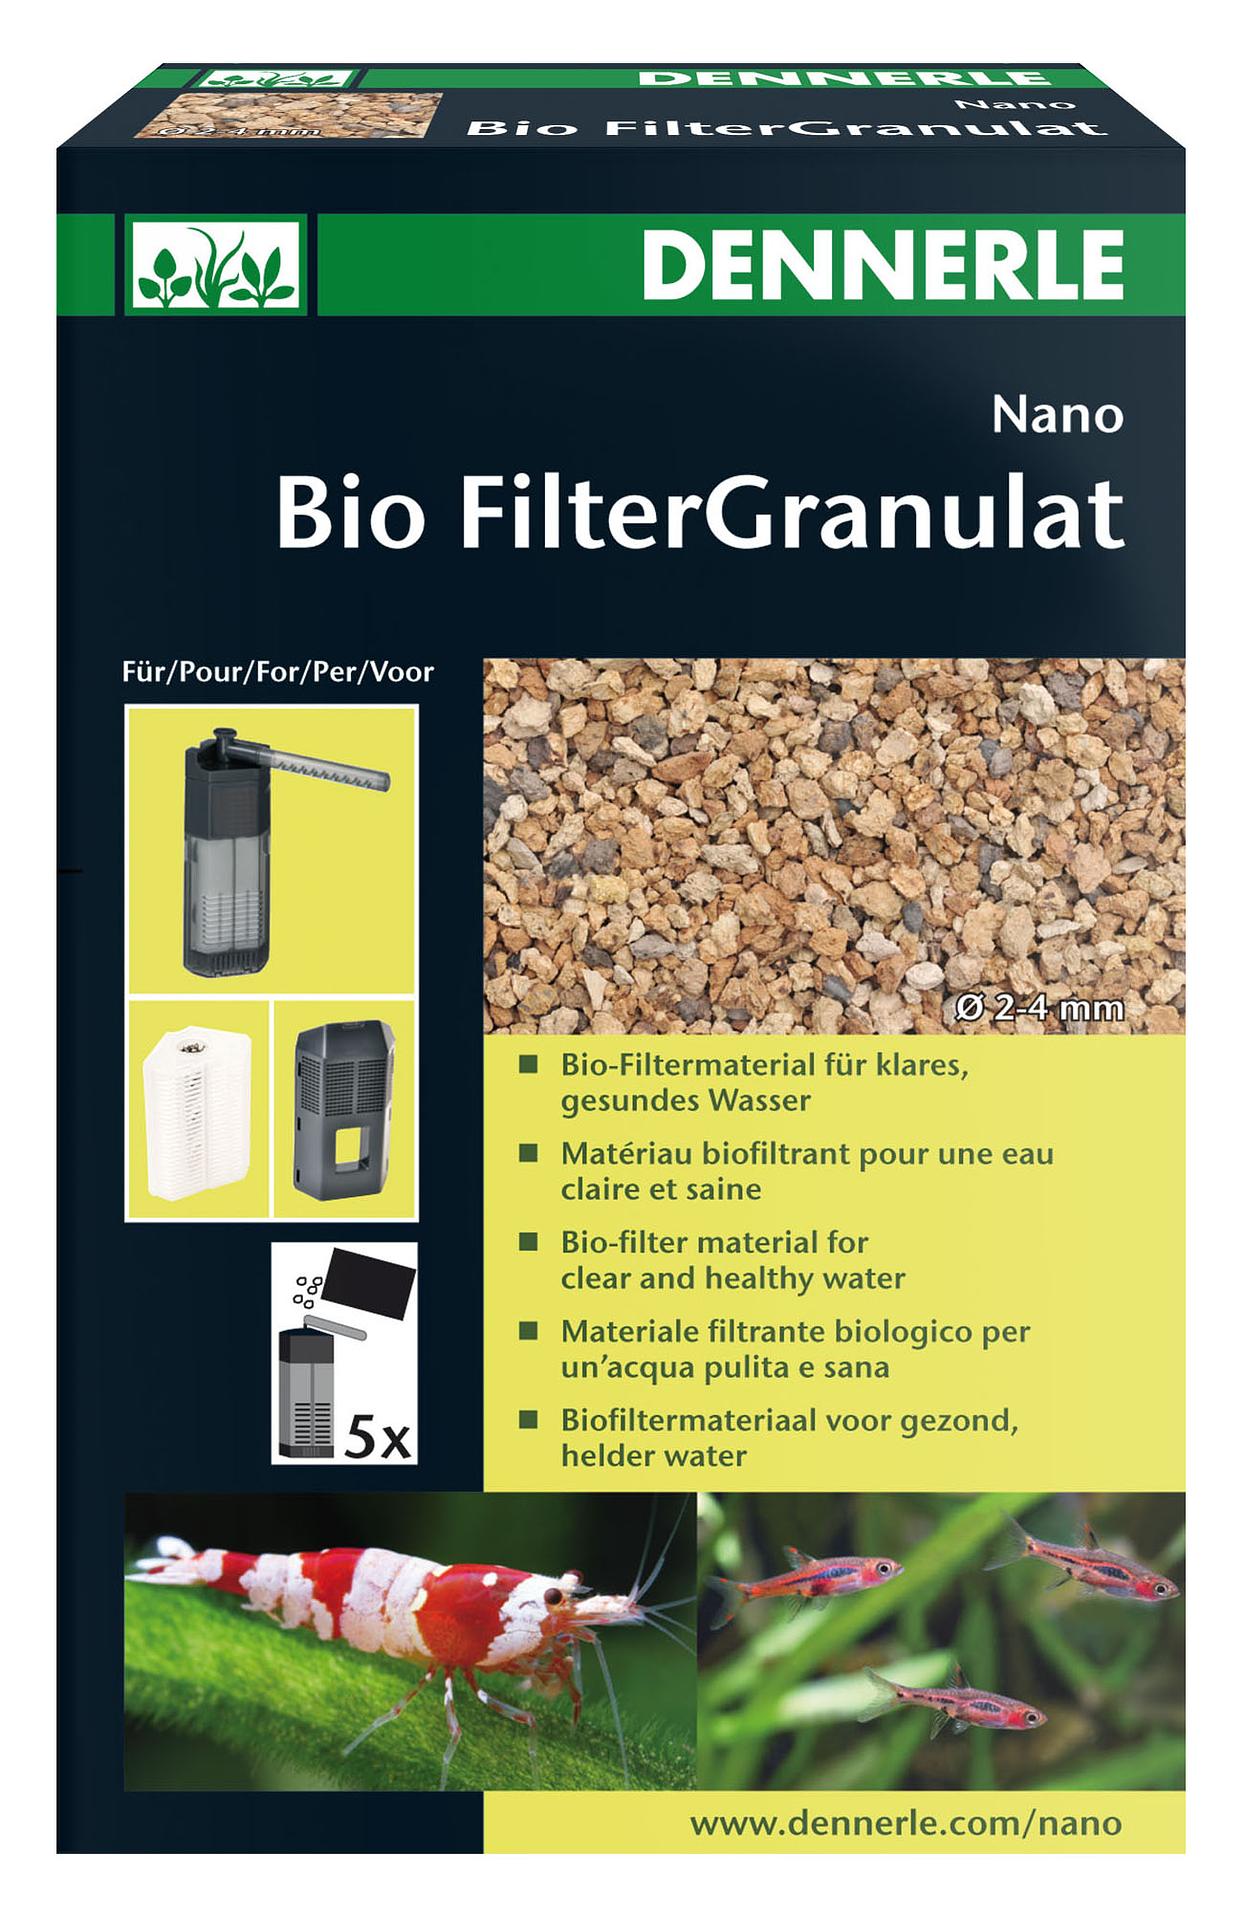 Dennerle Nano Bio FilterGranulat 200ml